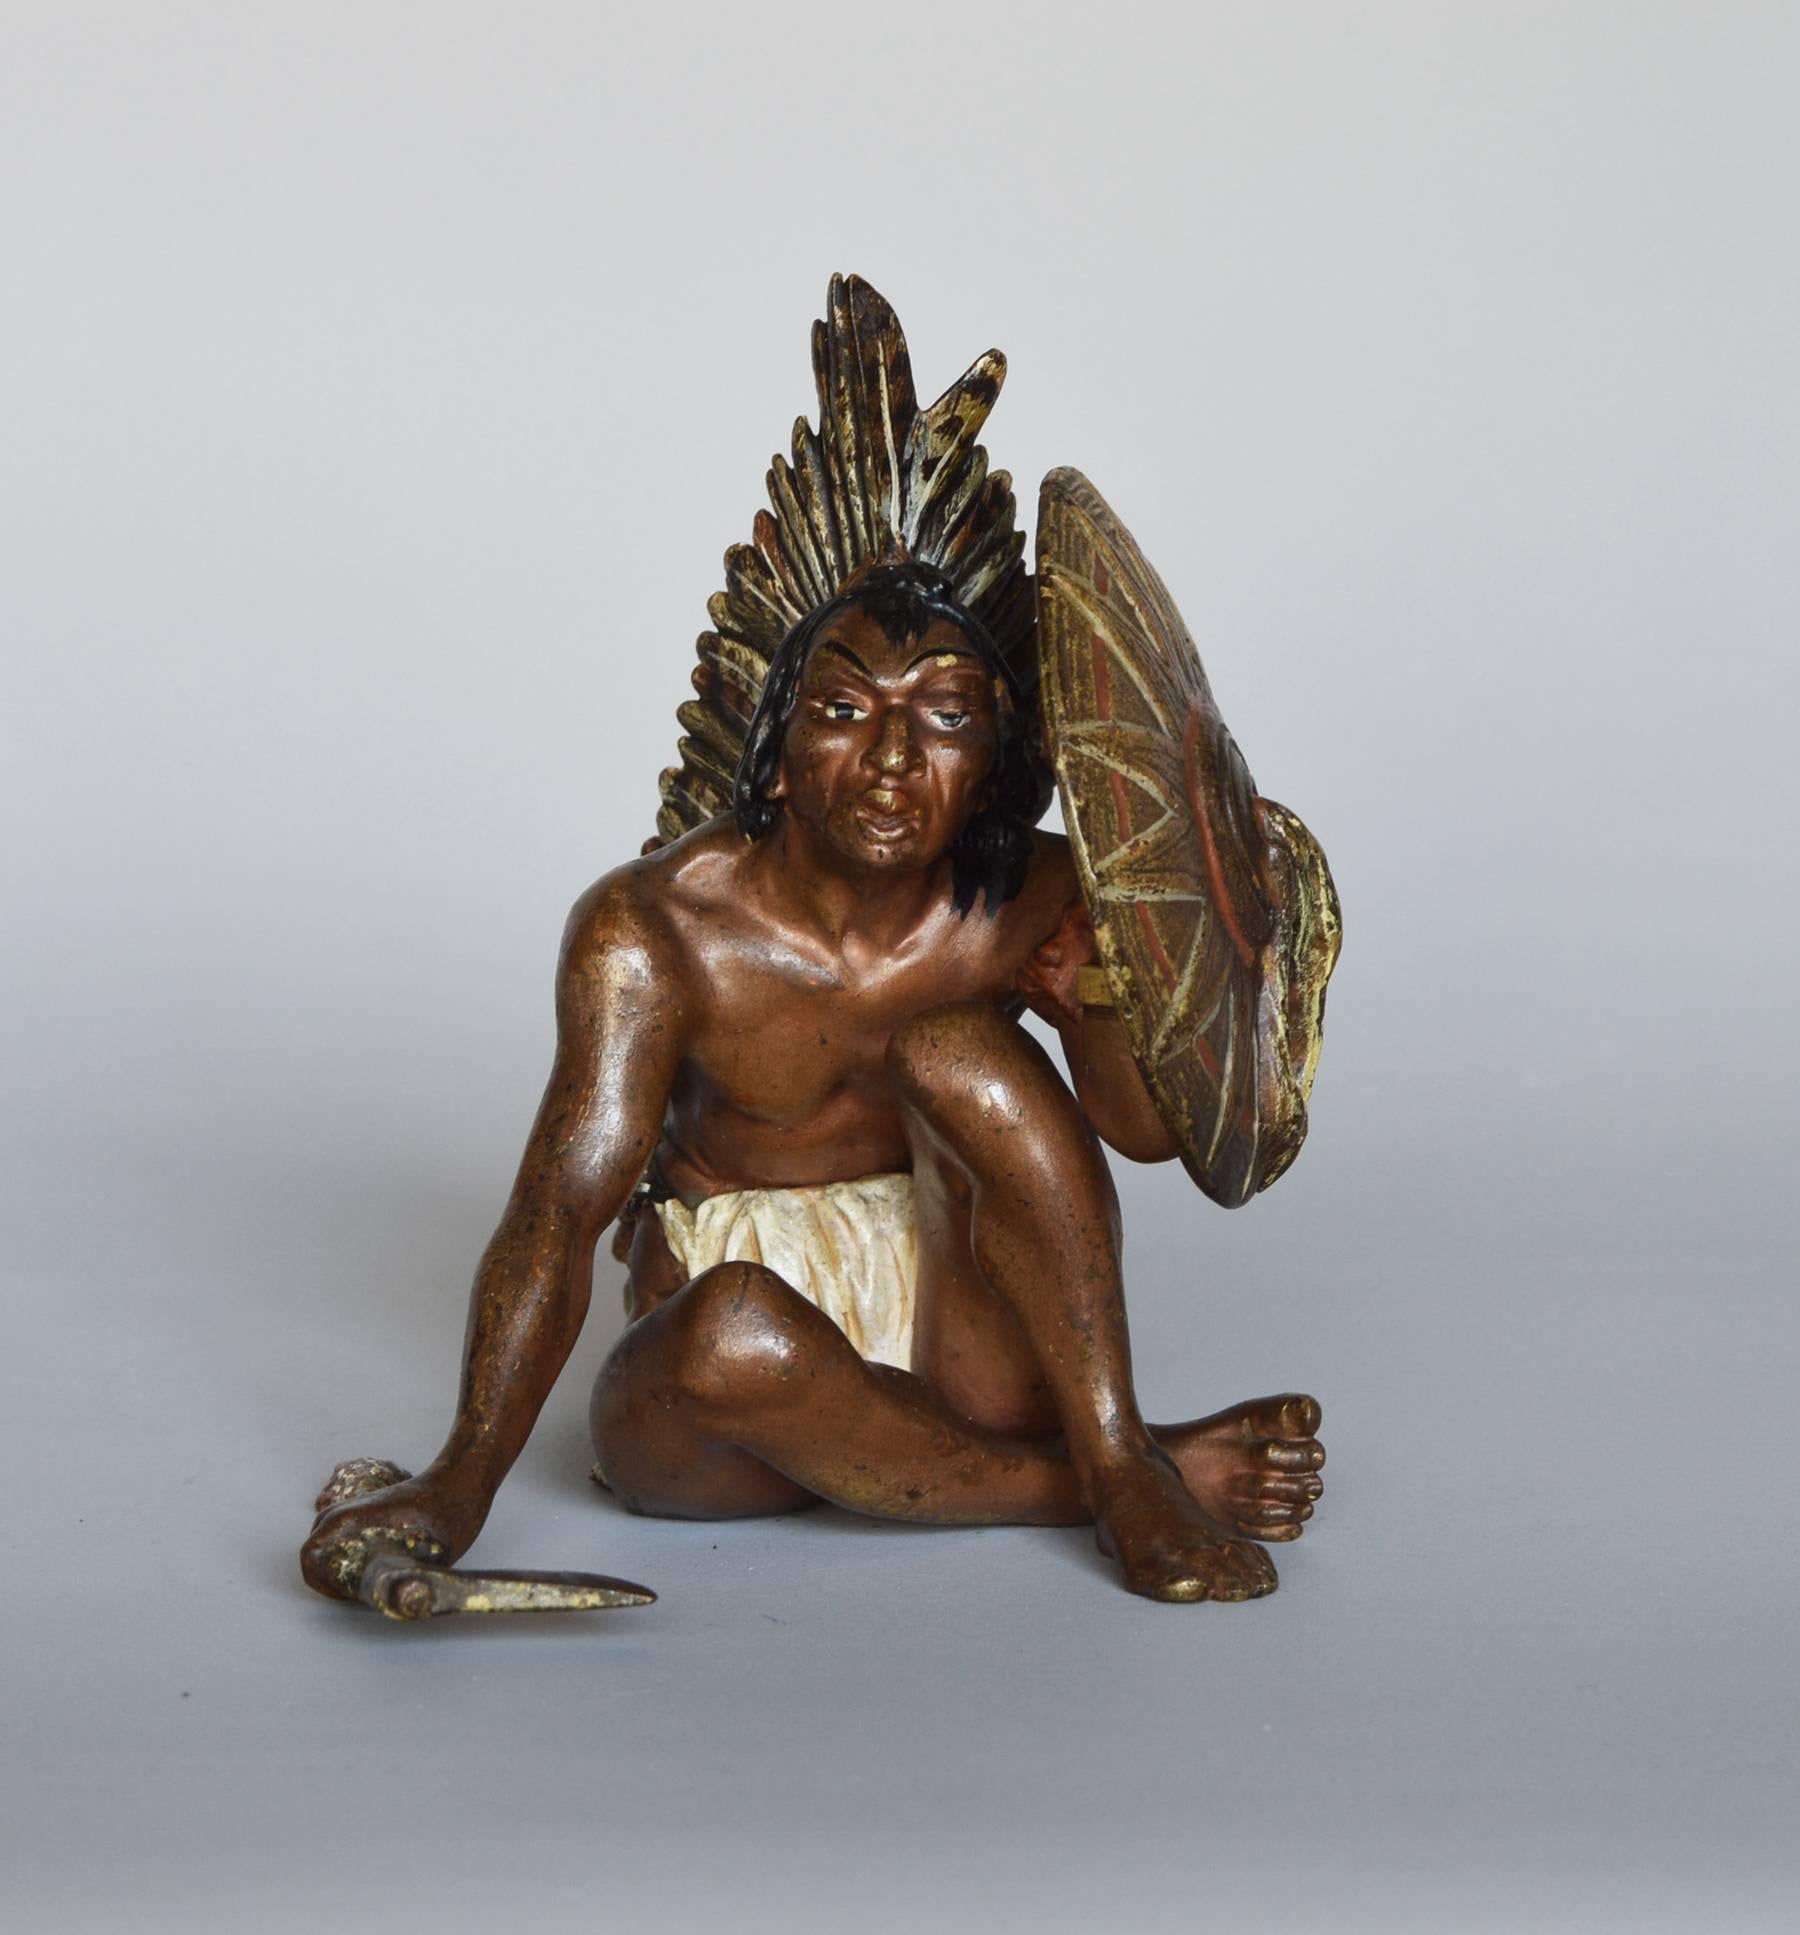 Native American Indian Sitting, bronze sculpture - Sculpture by Franz Bergmann